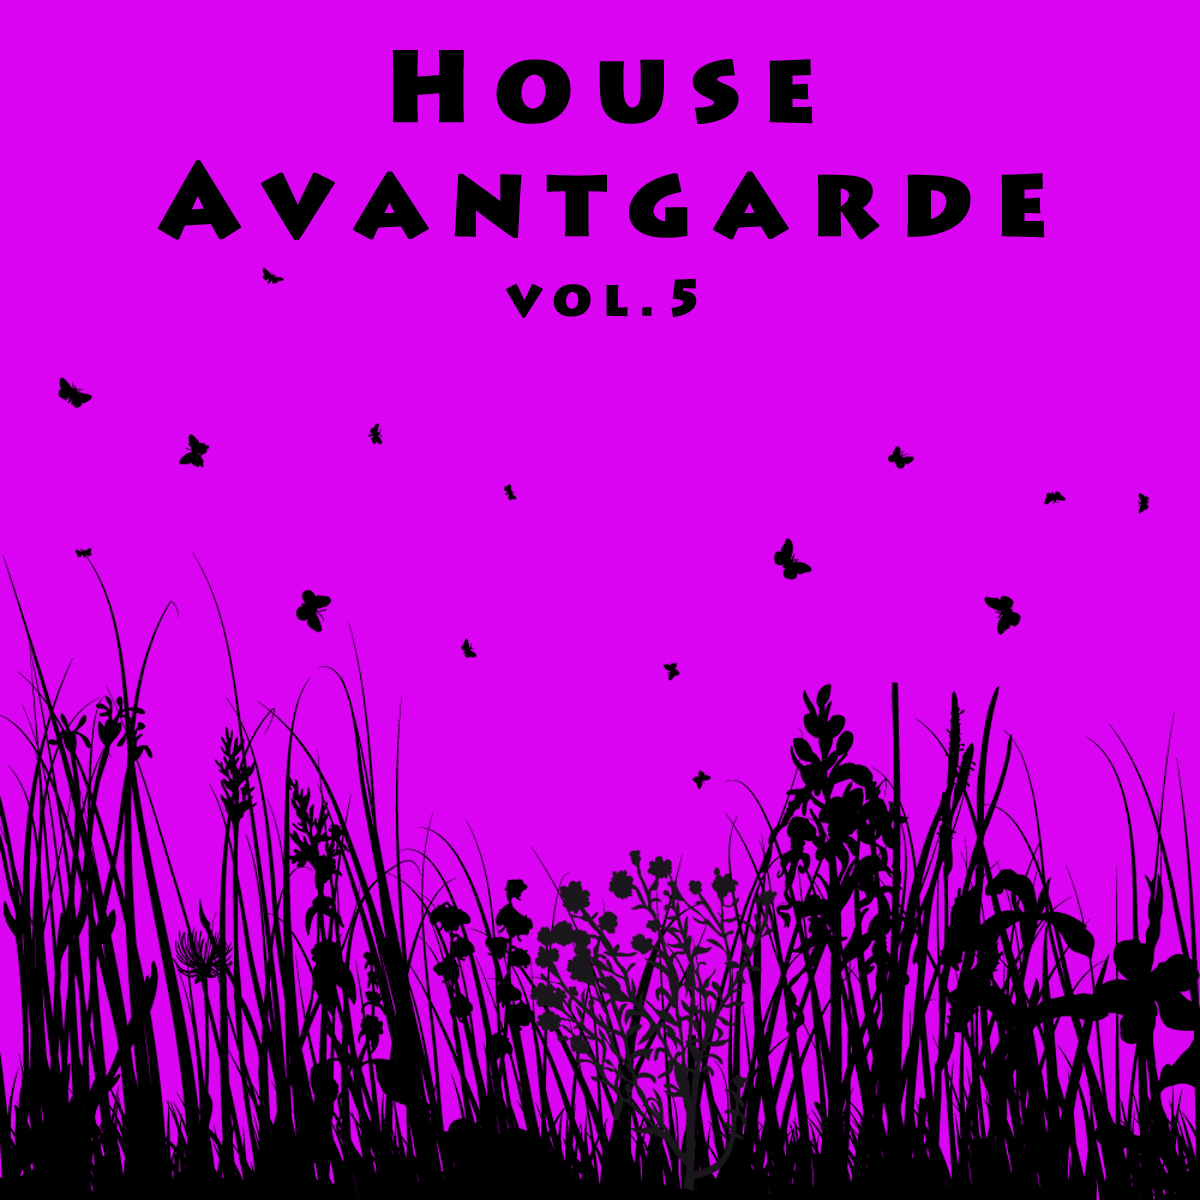 House Avantgarde Vol. 5